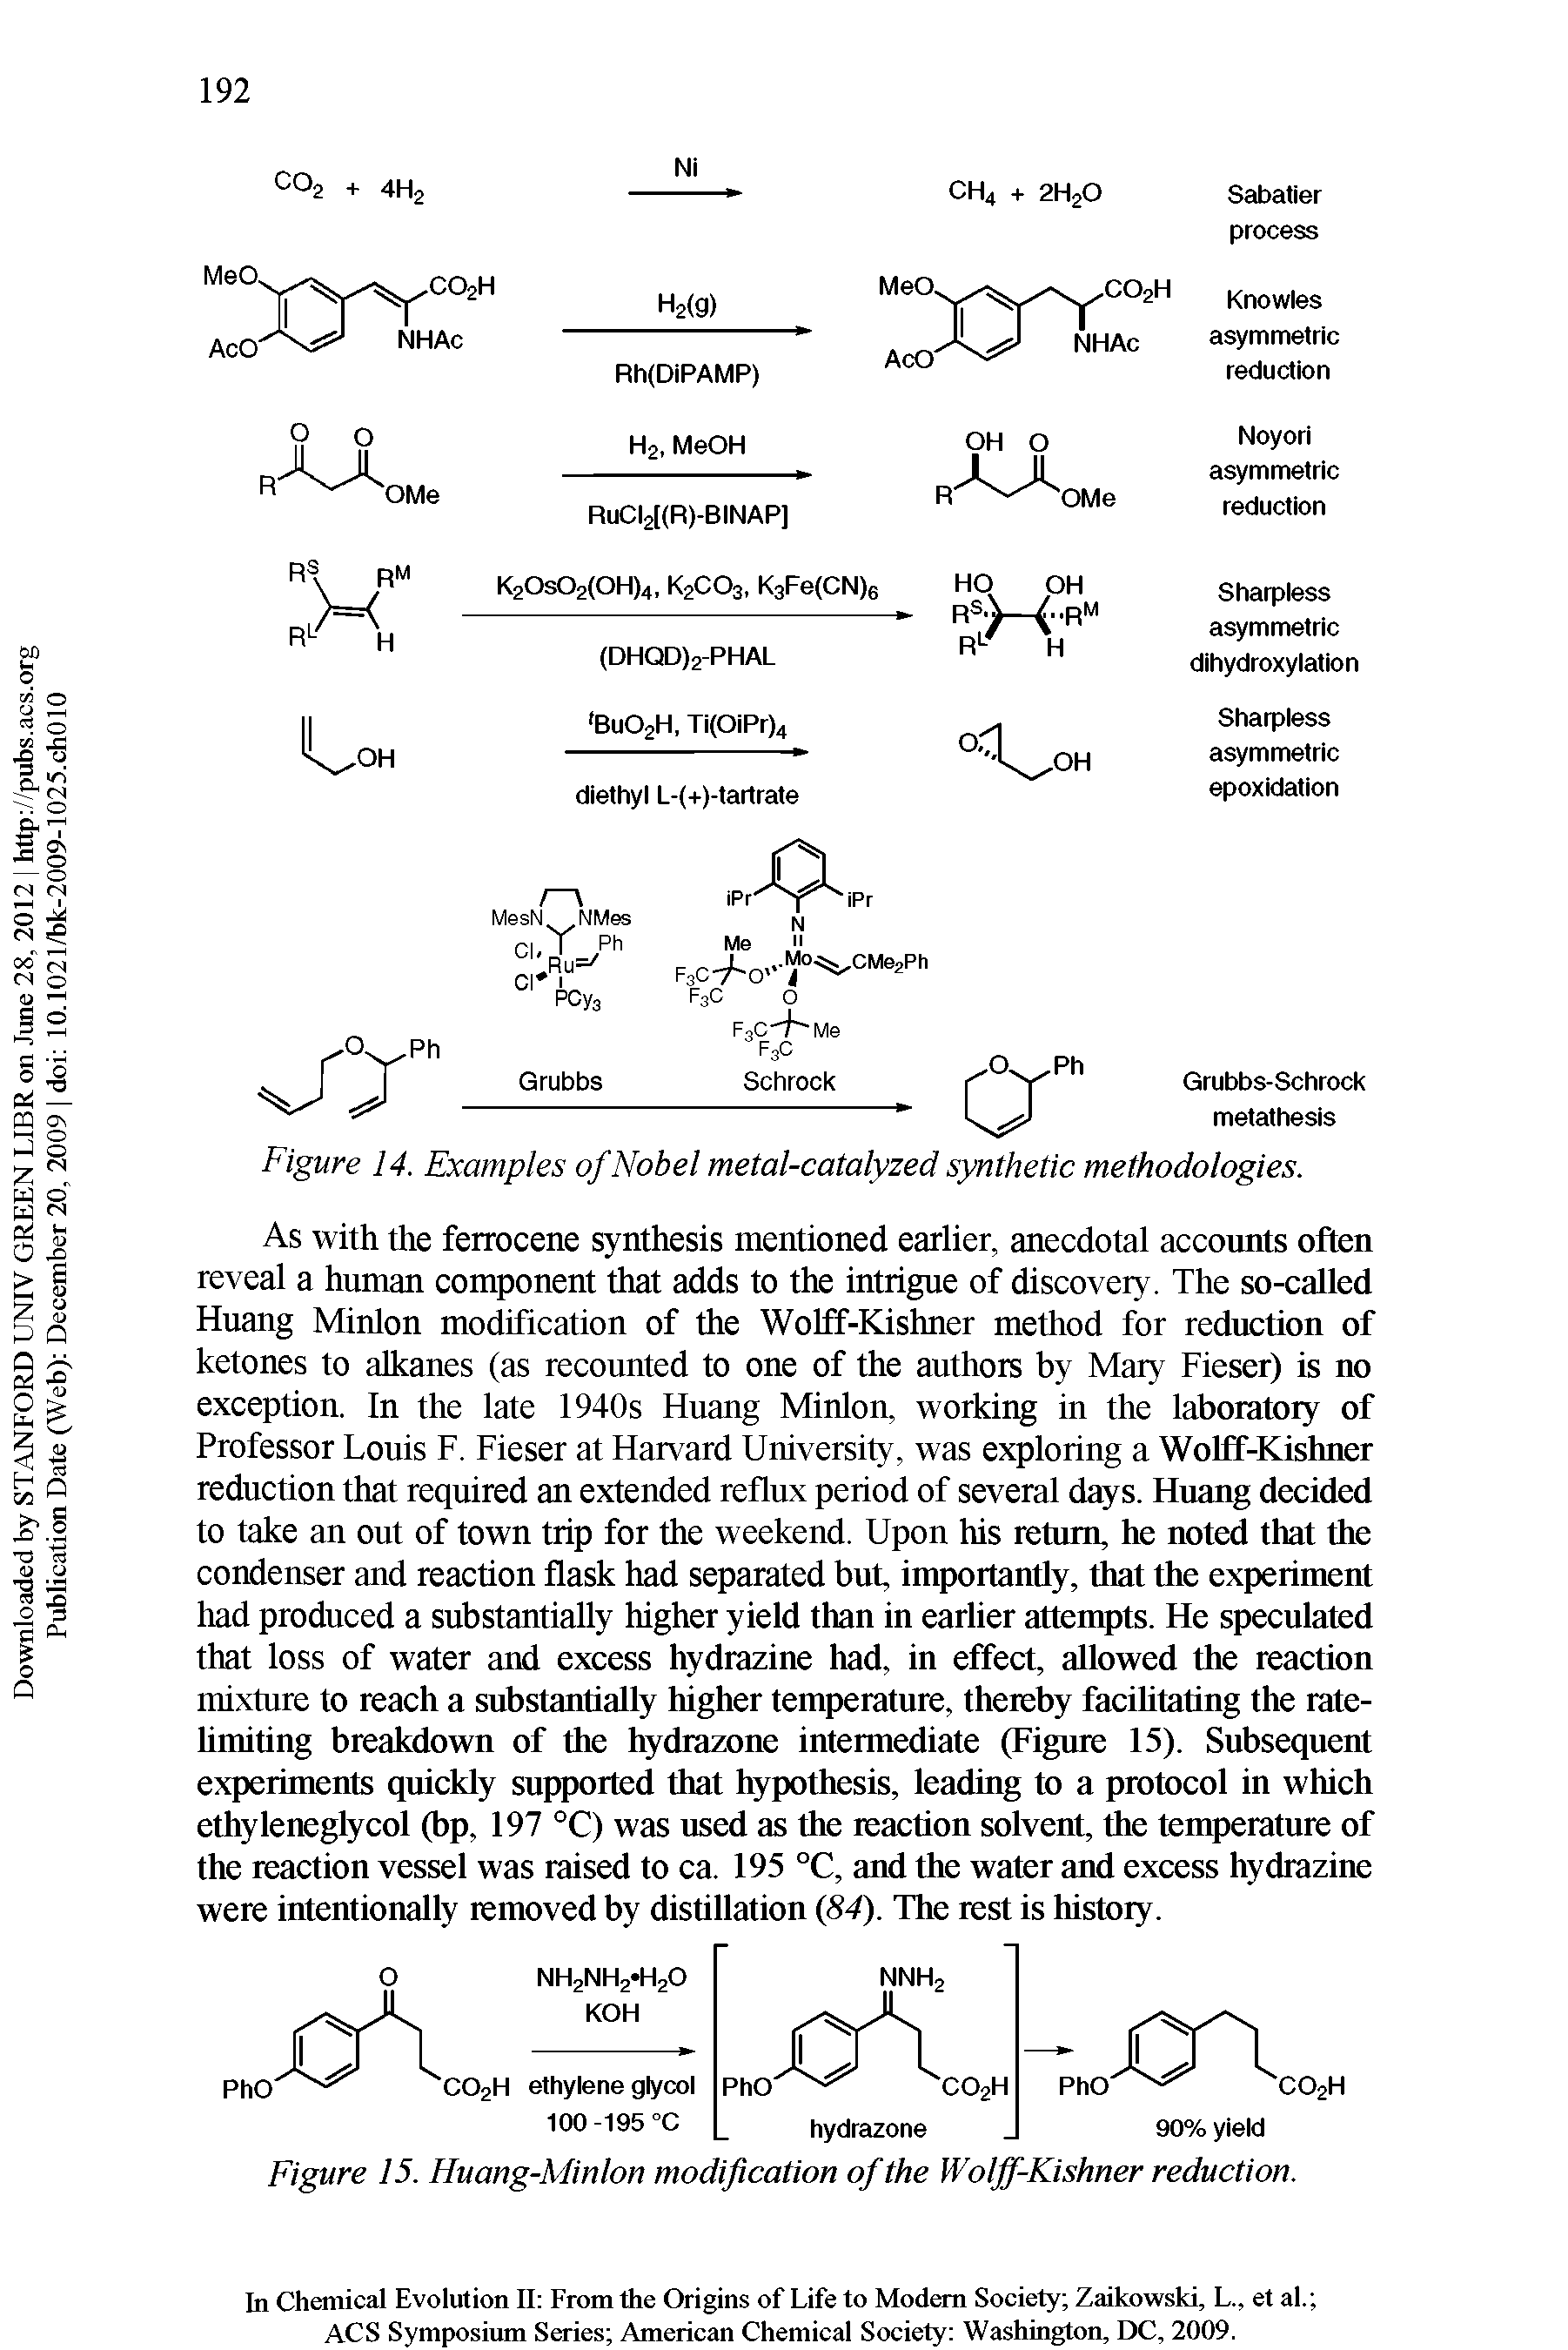 Figure 14. Examples of Nobel metal-catalyzed synthetic methodologies.